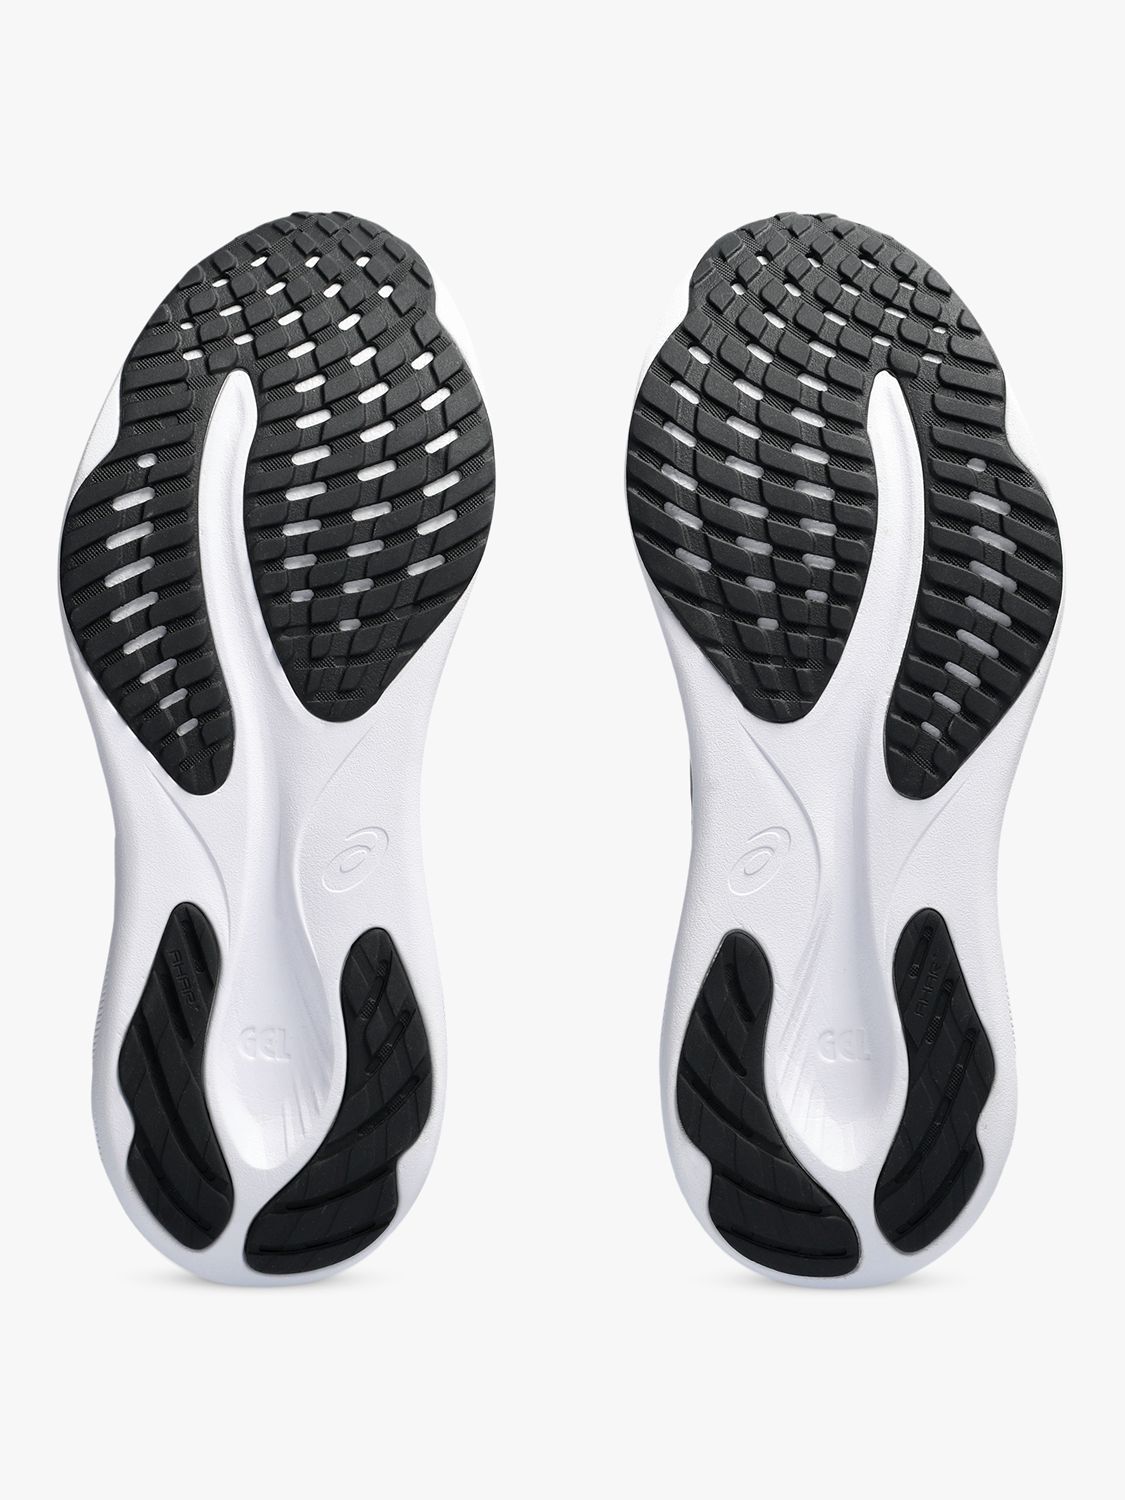 Buy ASICS GEL-PULSE 15 Men's Running Shoes, Black/Sheet Rock Online at johnlewis.com